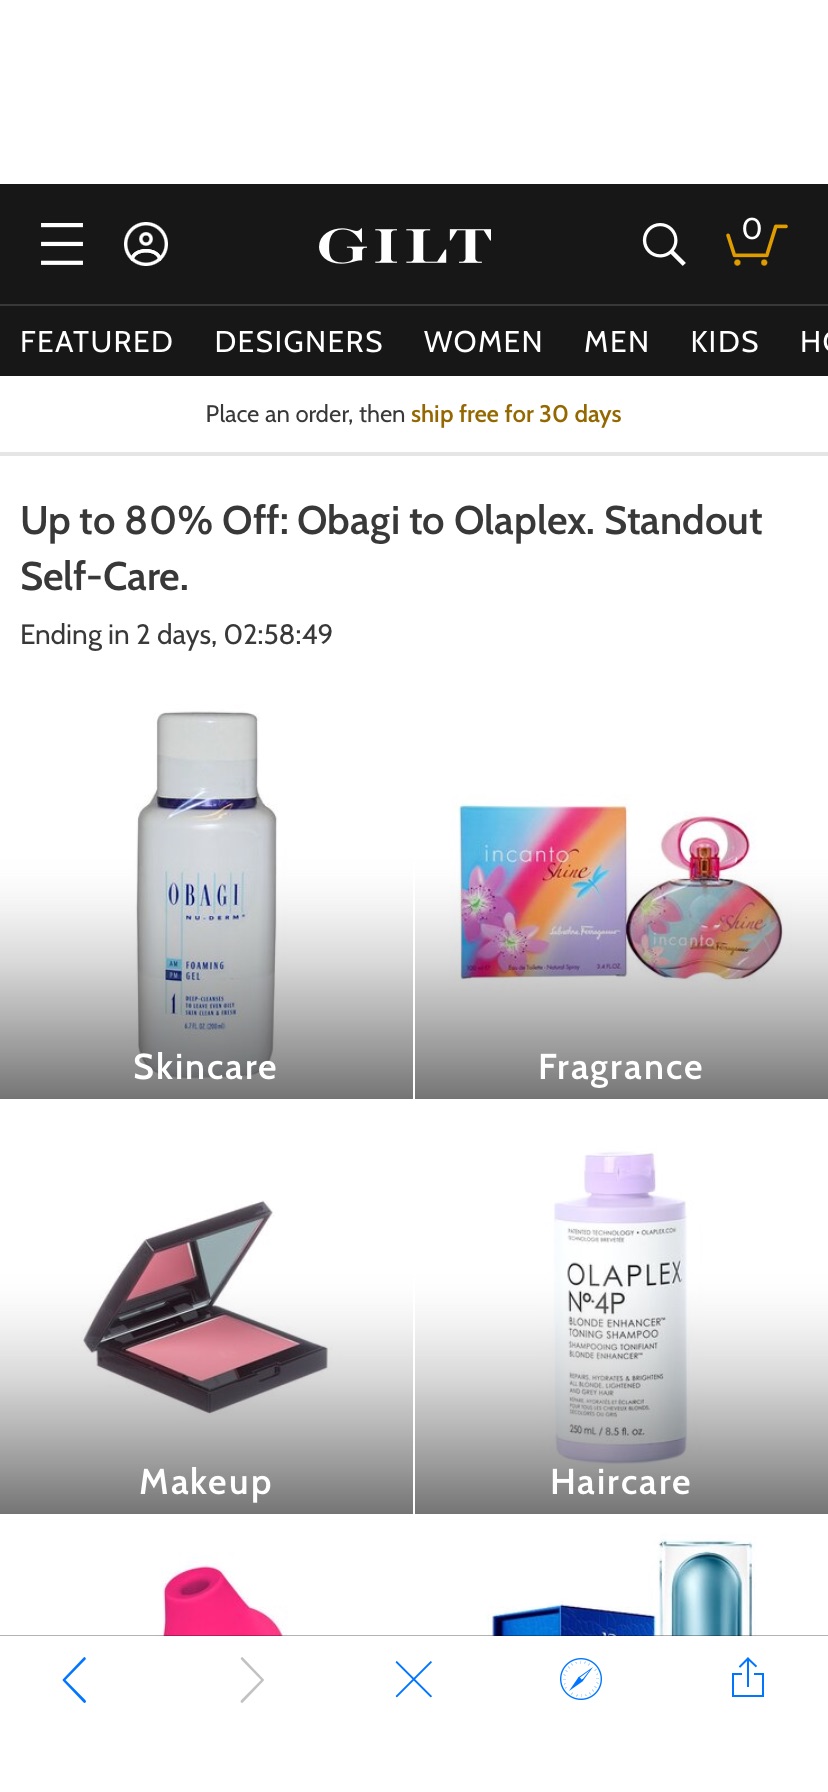 Up to 80% Off: Obagi to Olaplex. Standout Self-Care. / Gilt